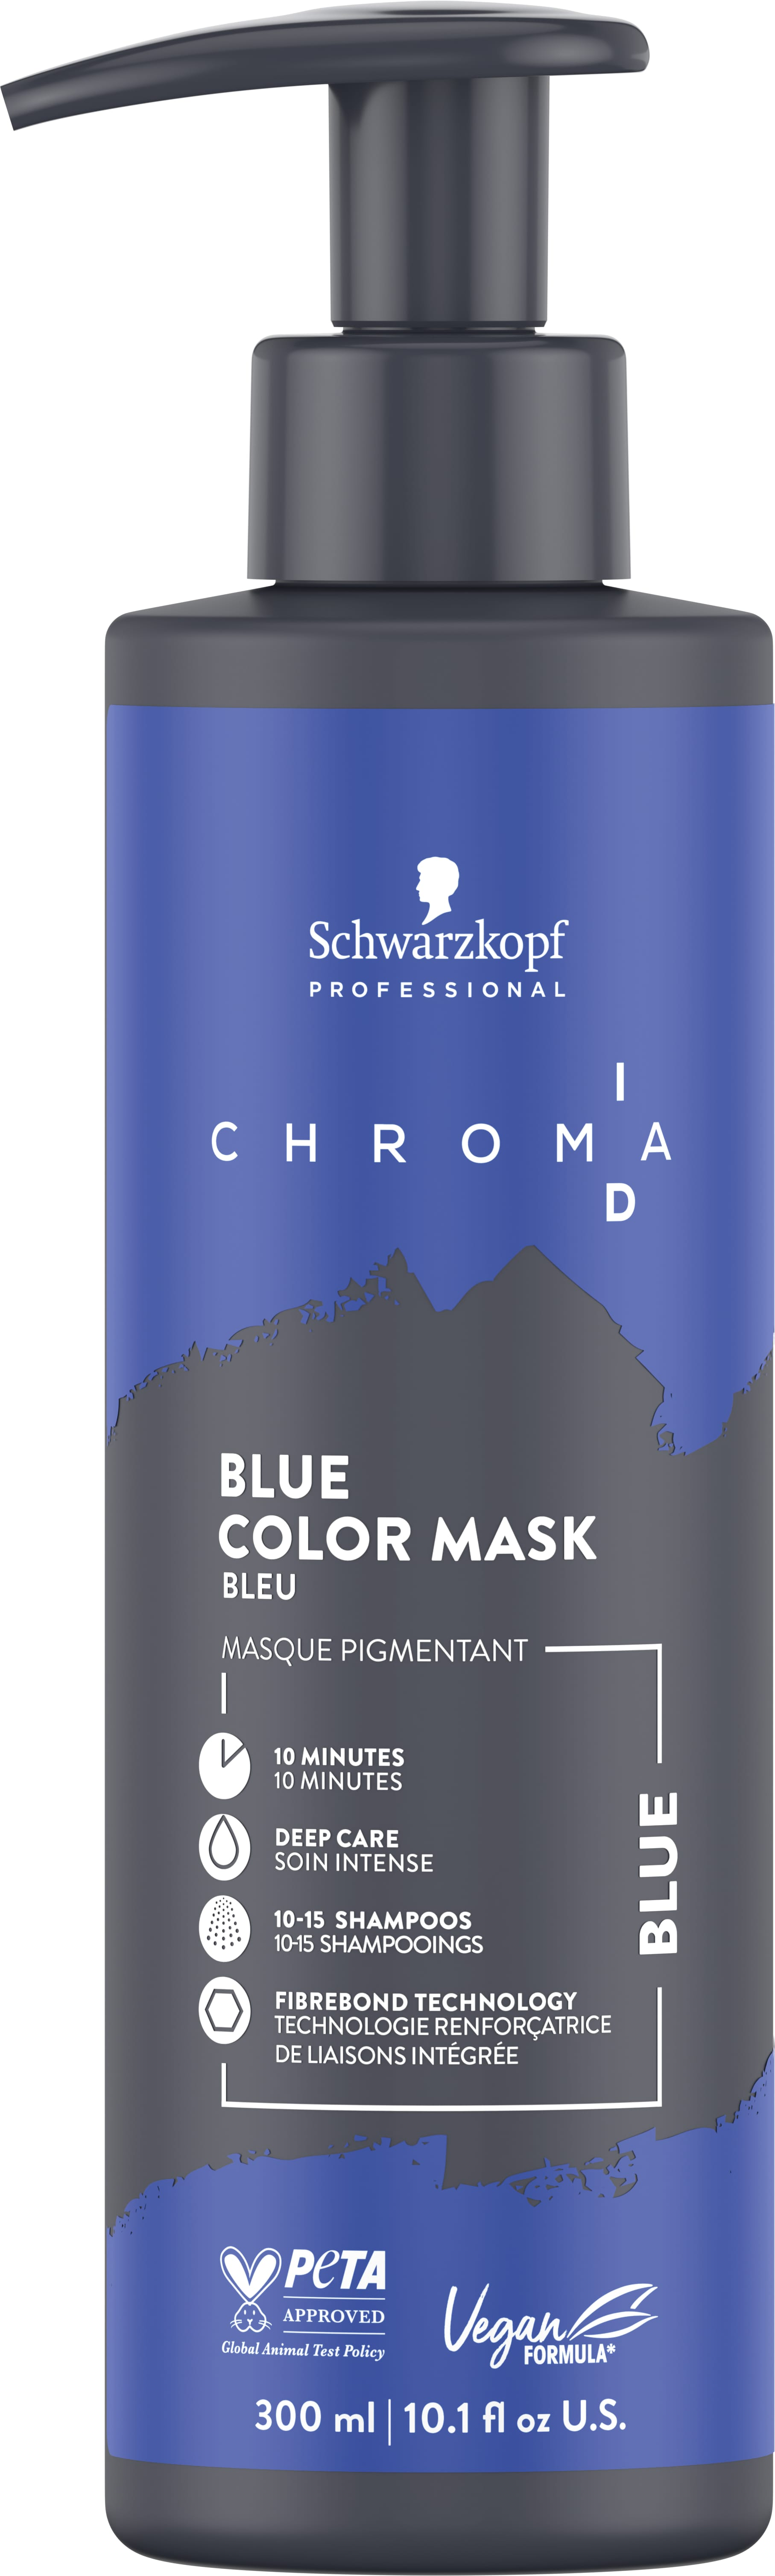 Chroma ID - Bonding Color Mask Blue